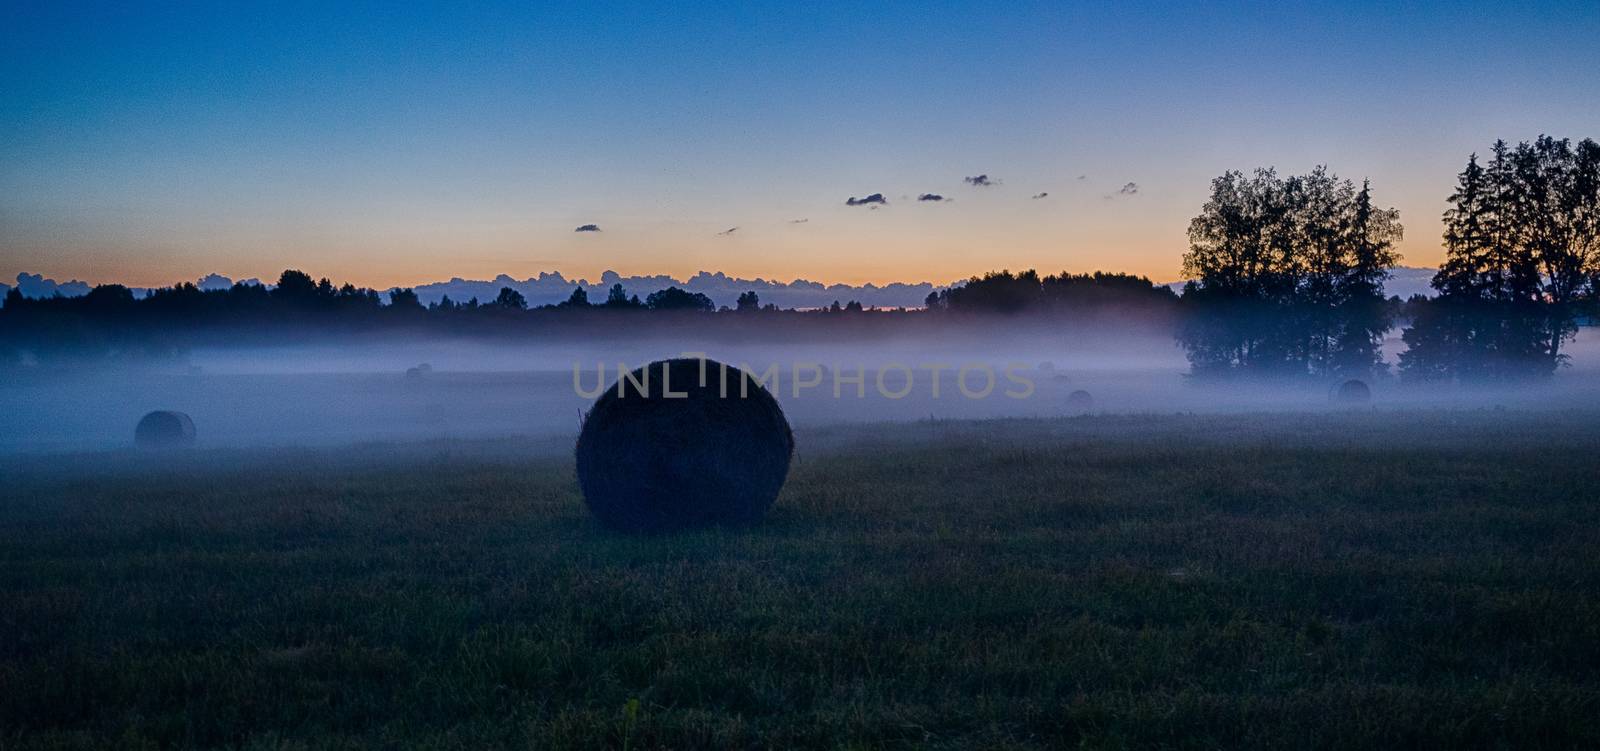 Latvia vidzeme landscape at sunset with fog and mist